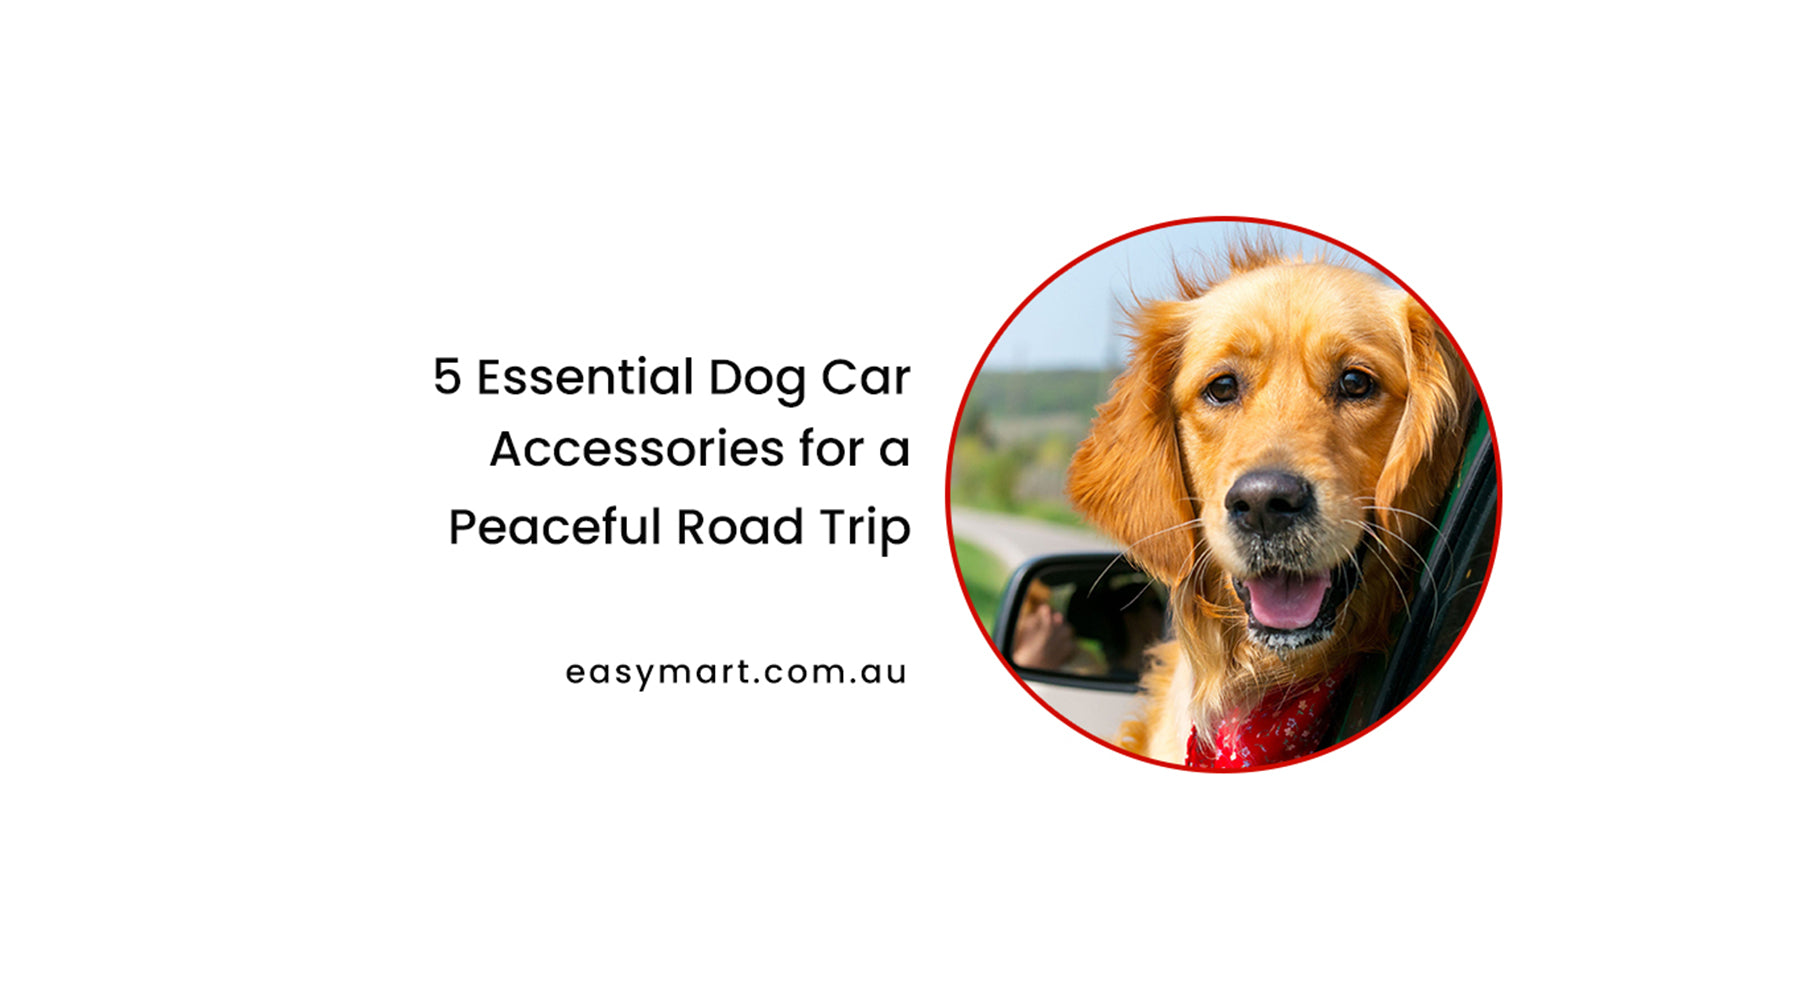 5 Essential Dog Car Accessories for a Peaceful Road Trip